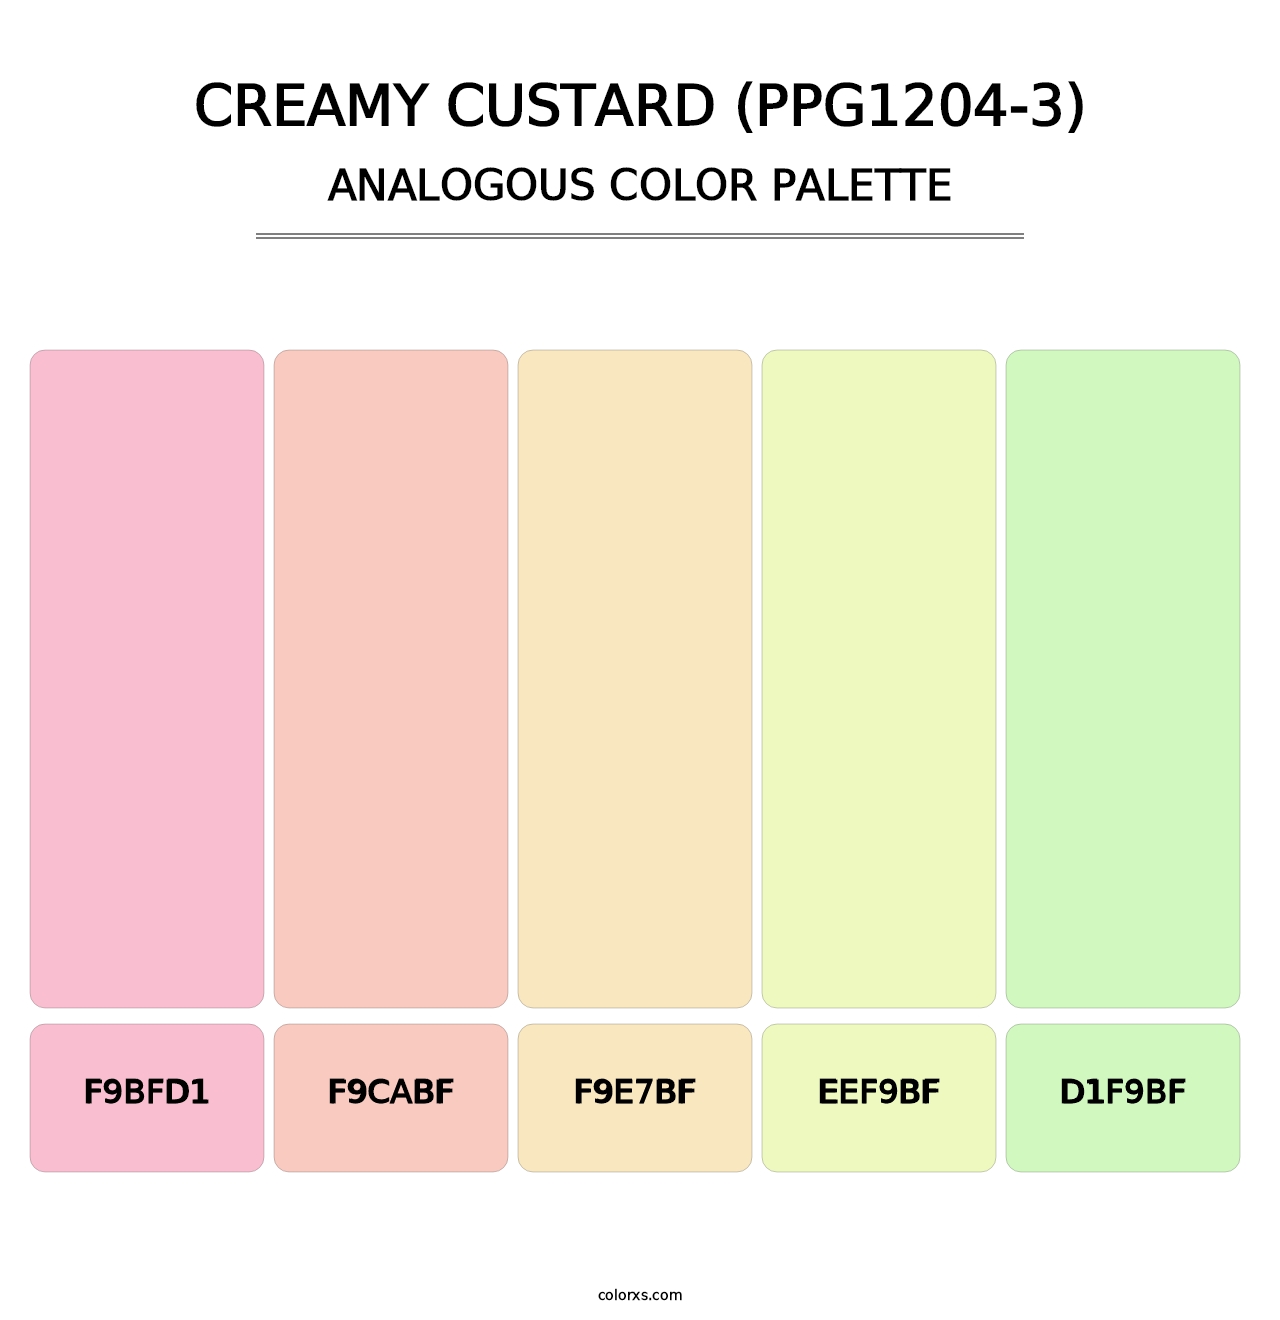 Creamy Custard (PPG1204-3) - Analogous Color Palette